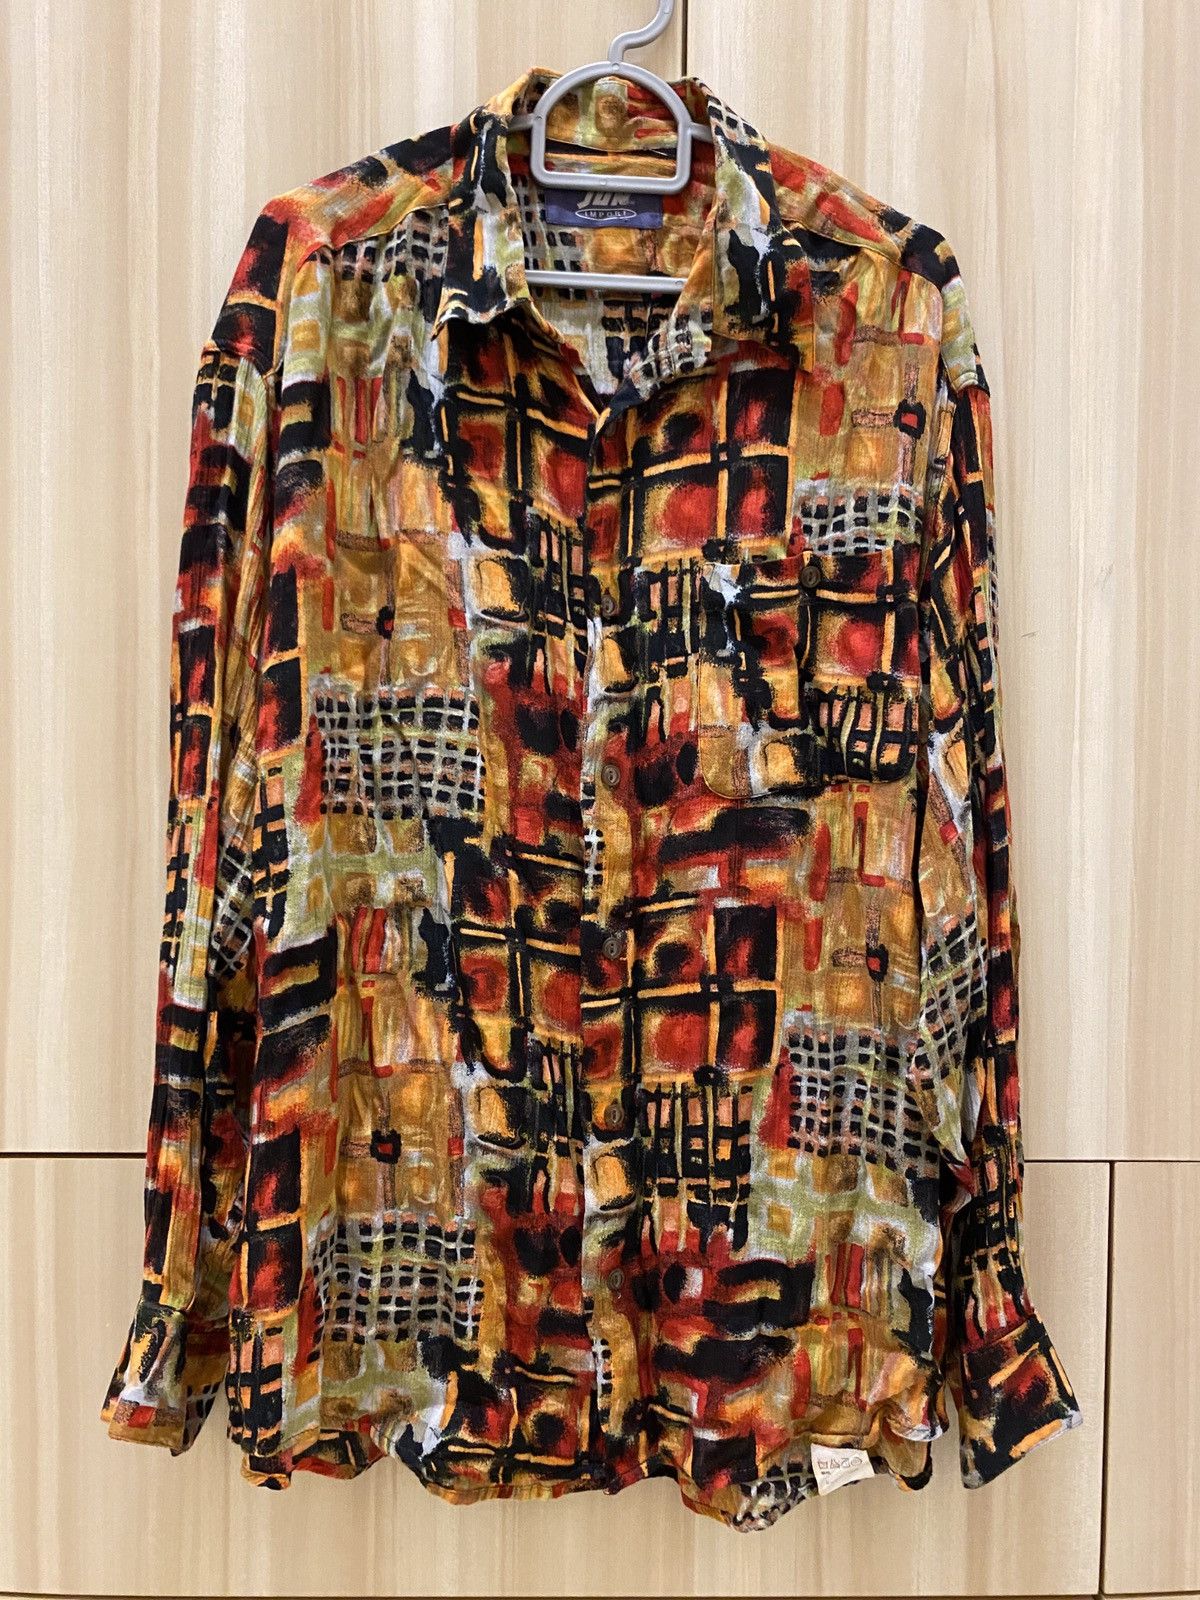 Japanese Brand - Jun men rayon shirt - 1